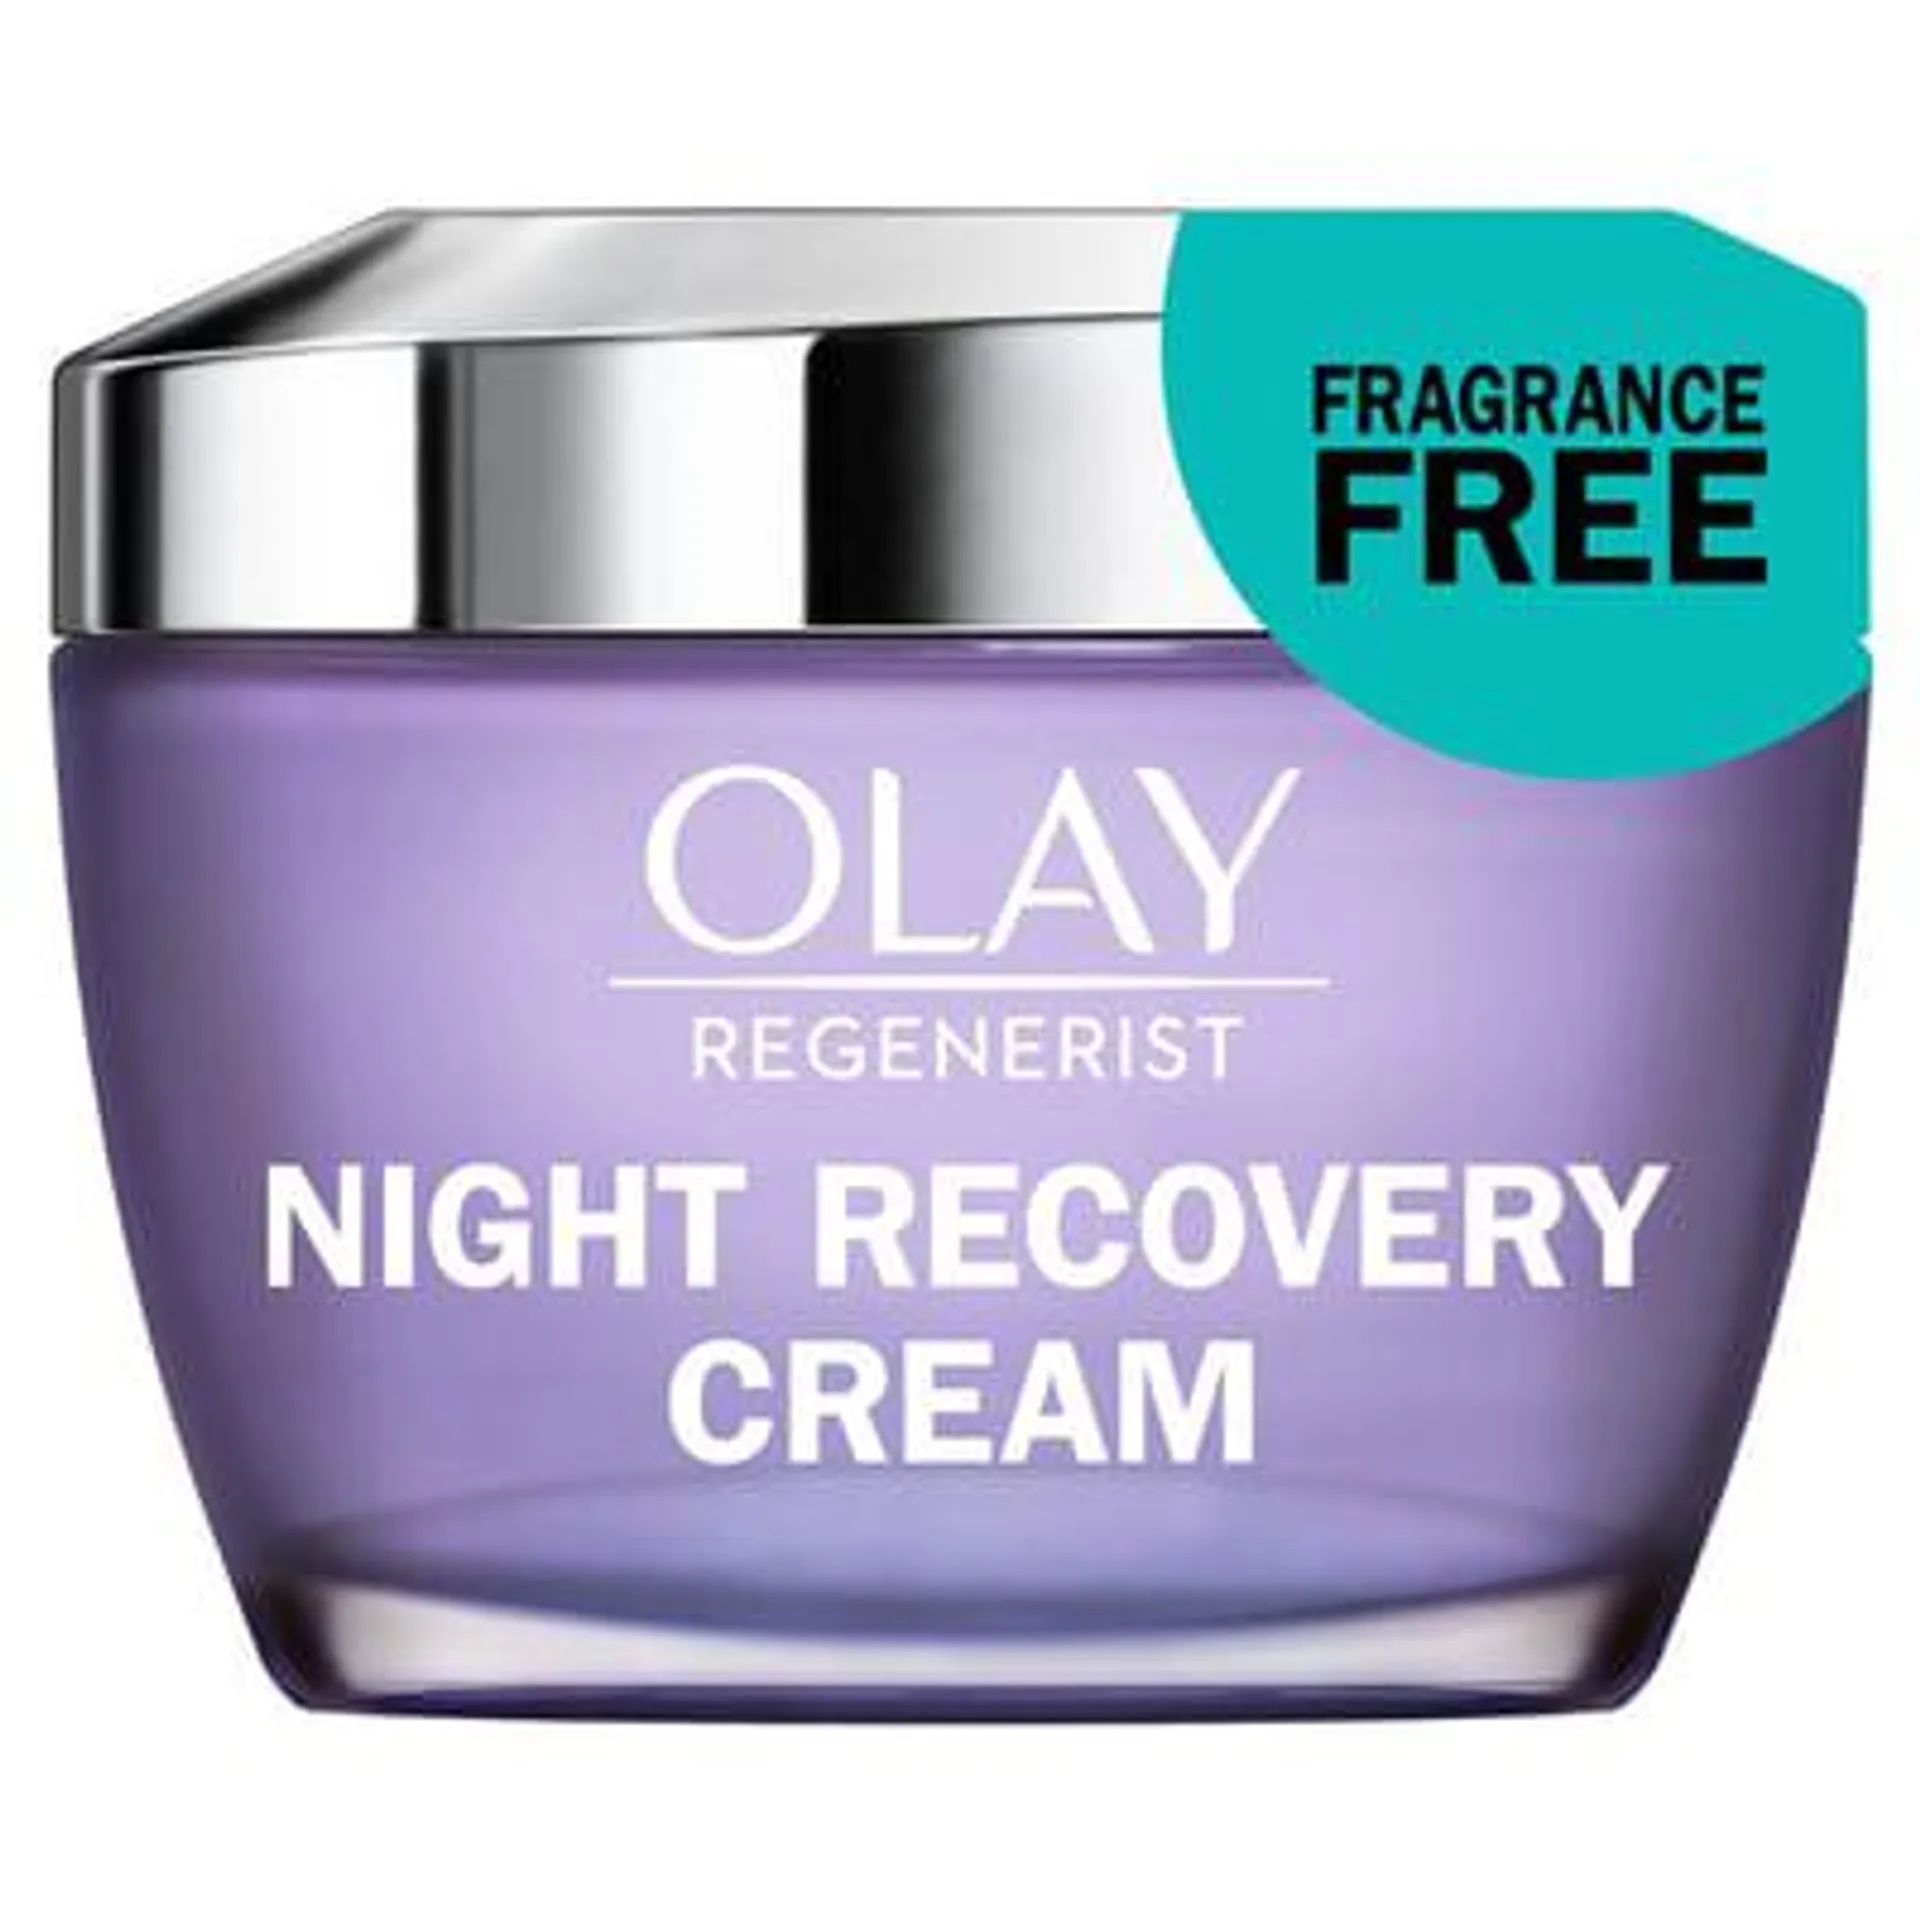 Olay, Regenerist - Regenerist Night Recovery Cream Face Moisturizer, Fragrance Free, 1.7 oz